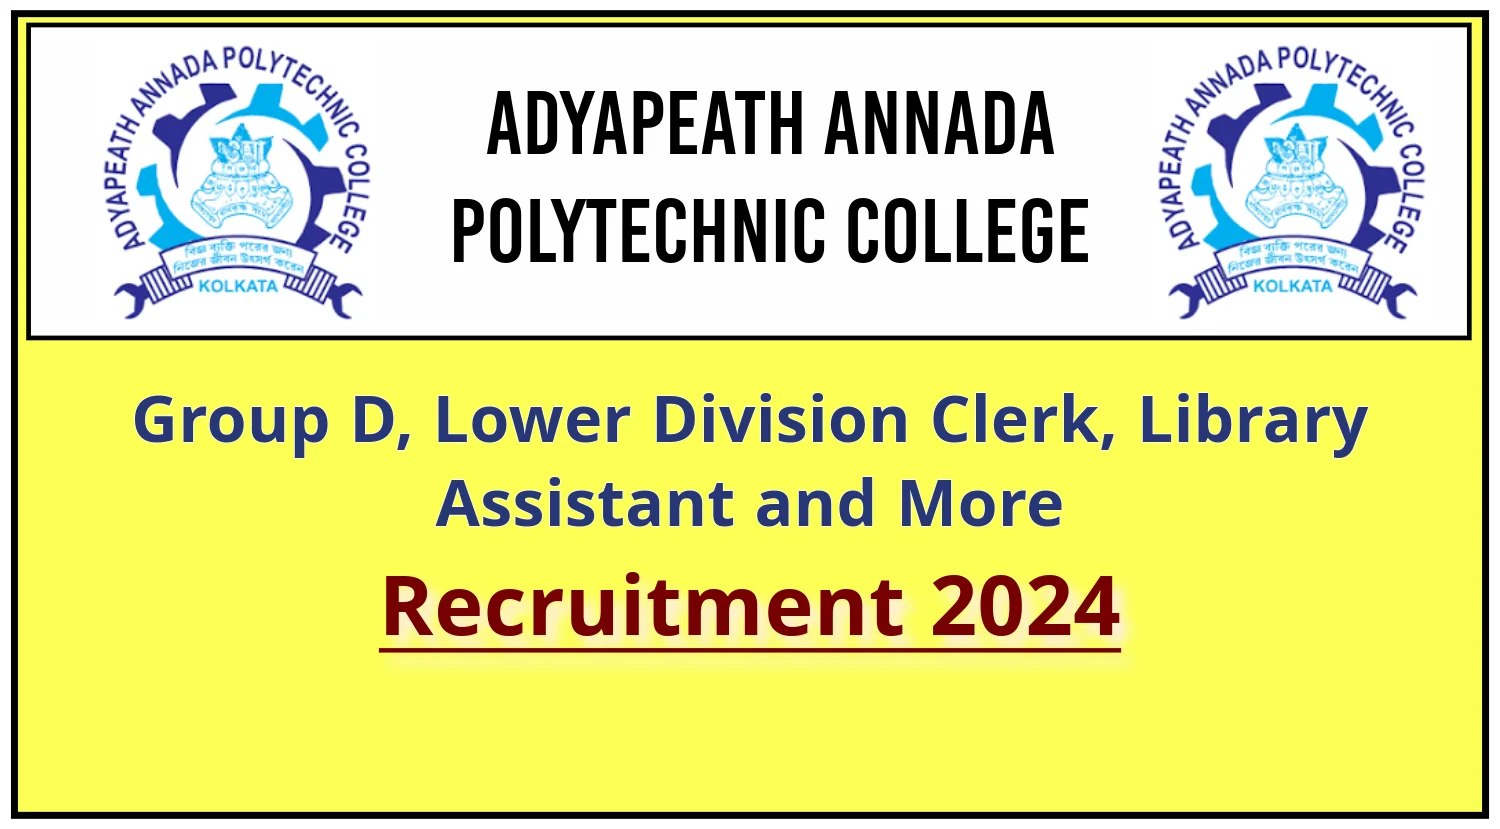 Adyapeath Annada Polytechnic College Recruitment 2024